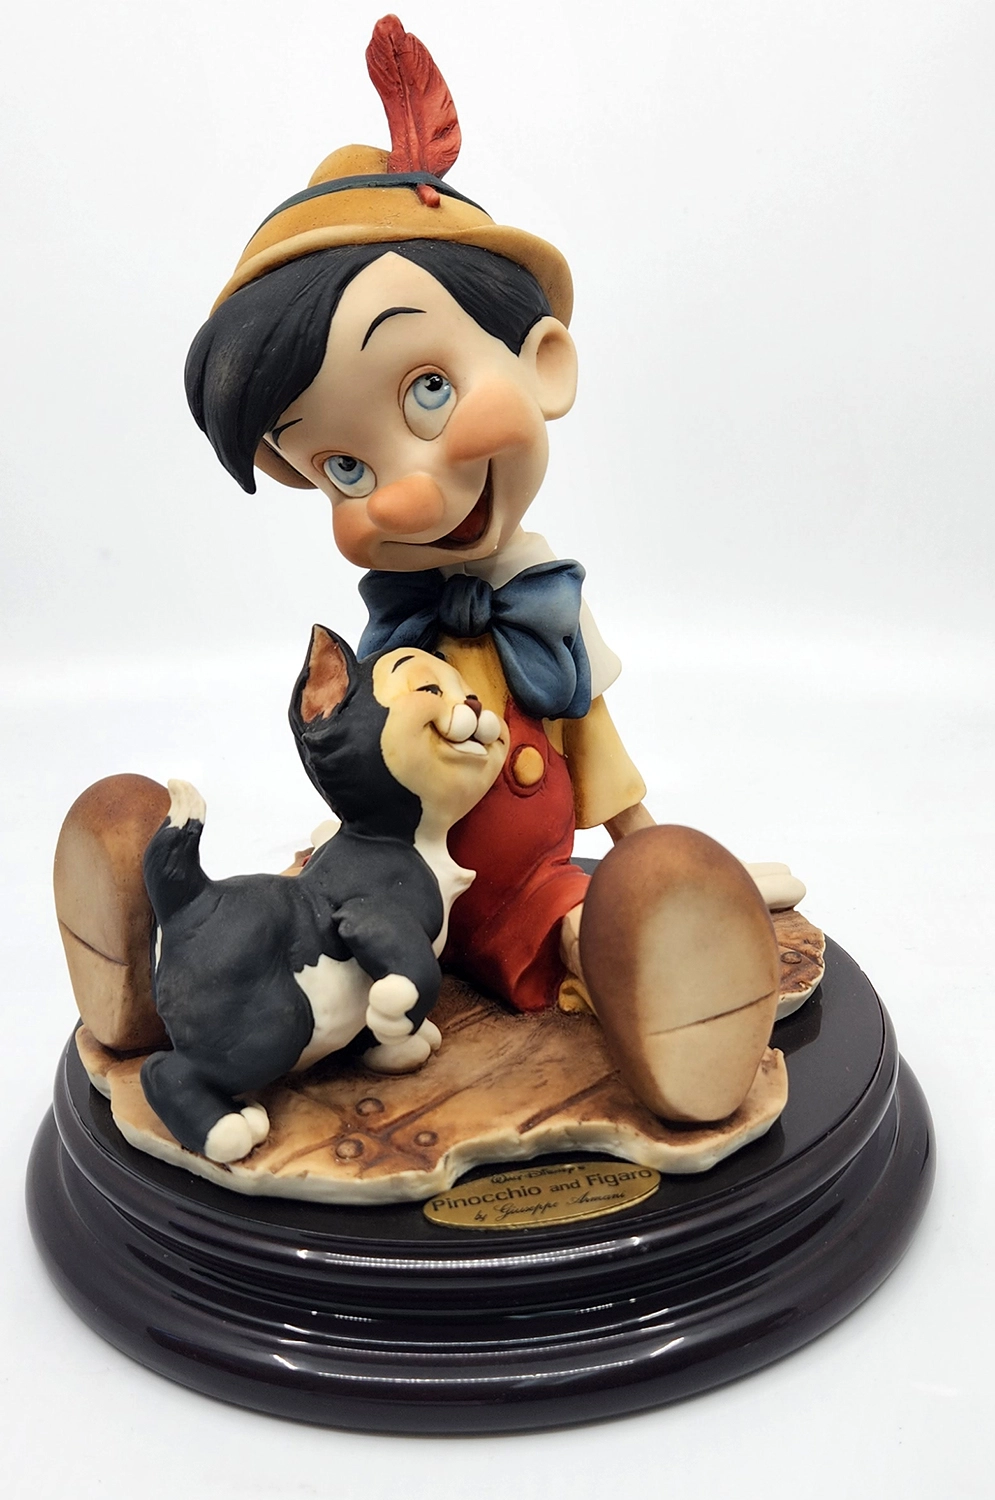 Giuseppe Armani Pinocchio & Figaro Sculpture